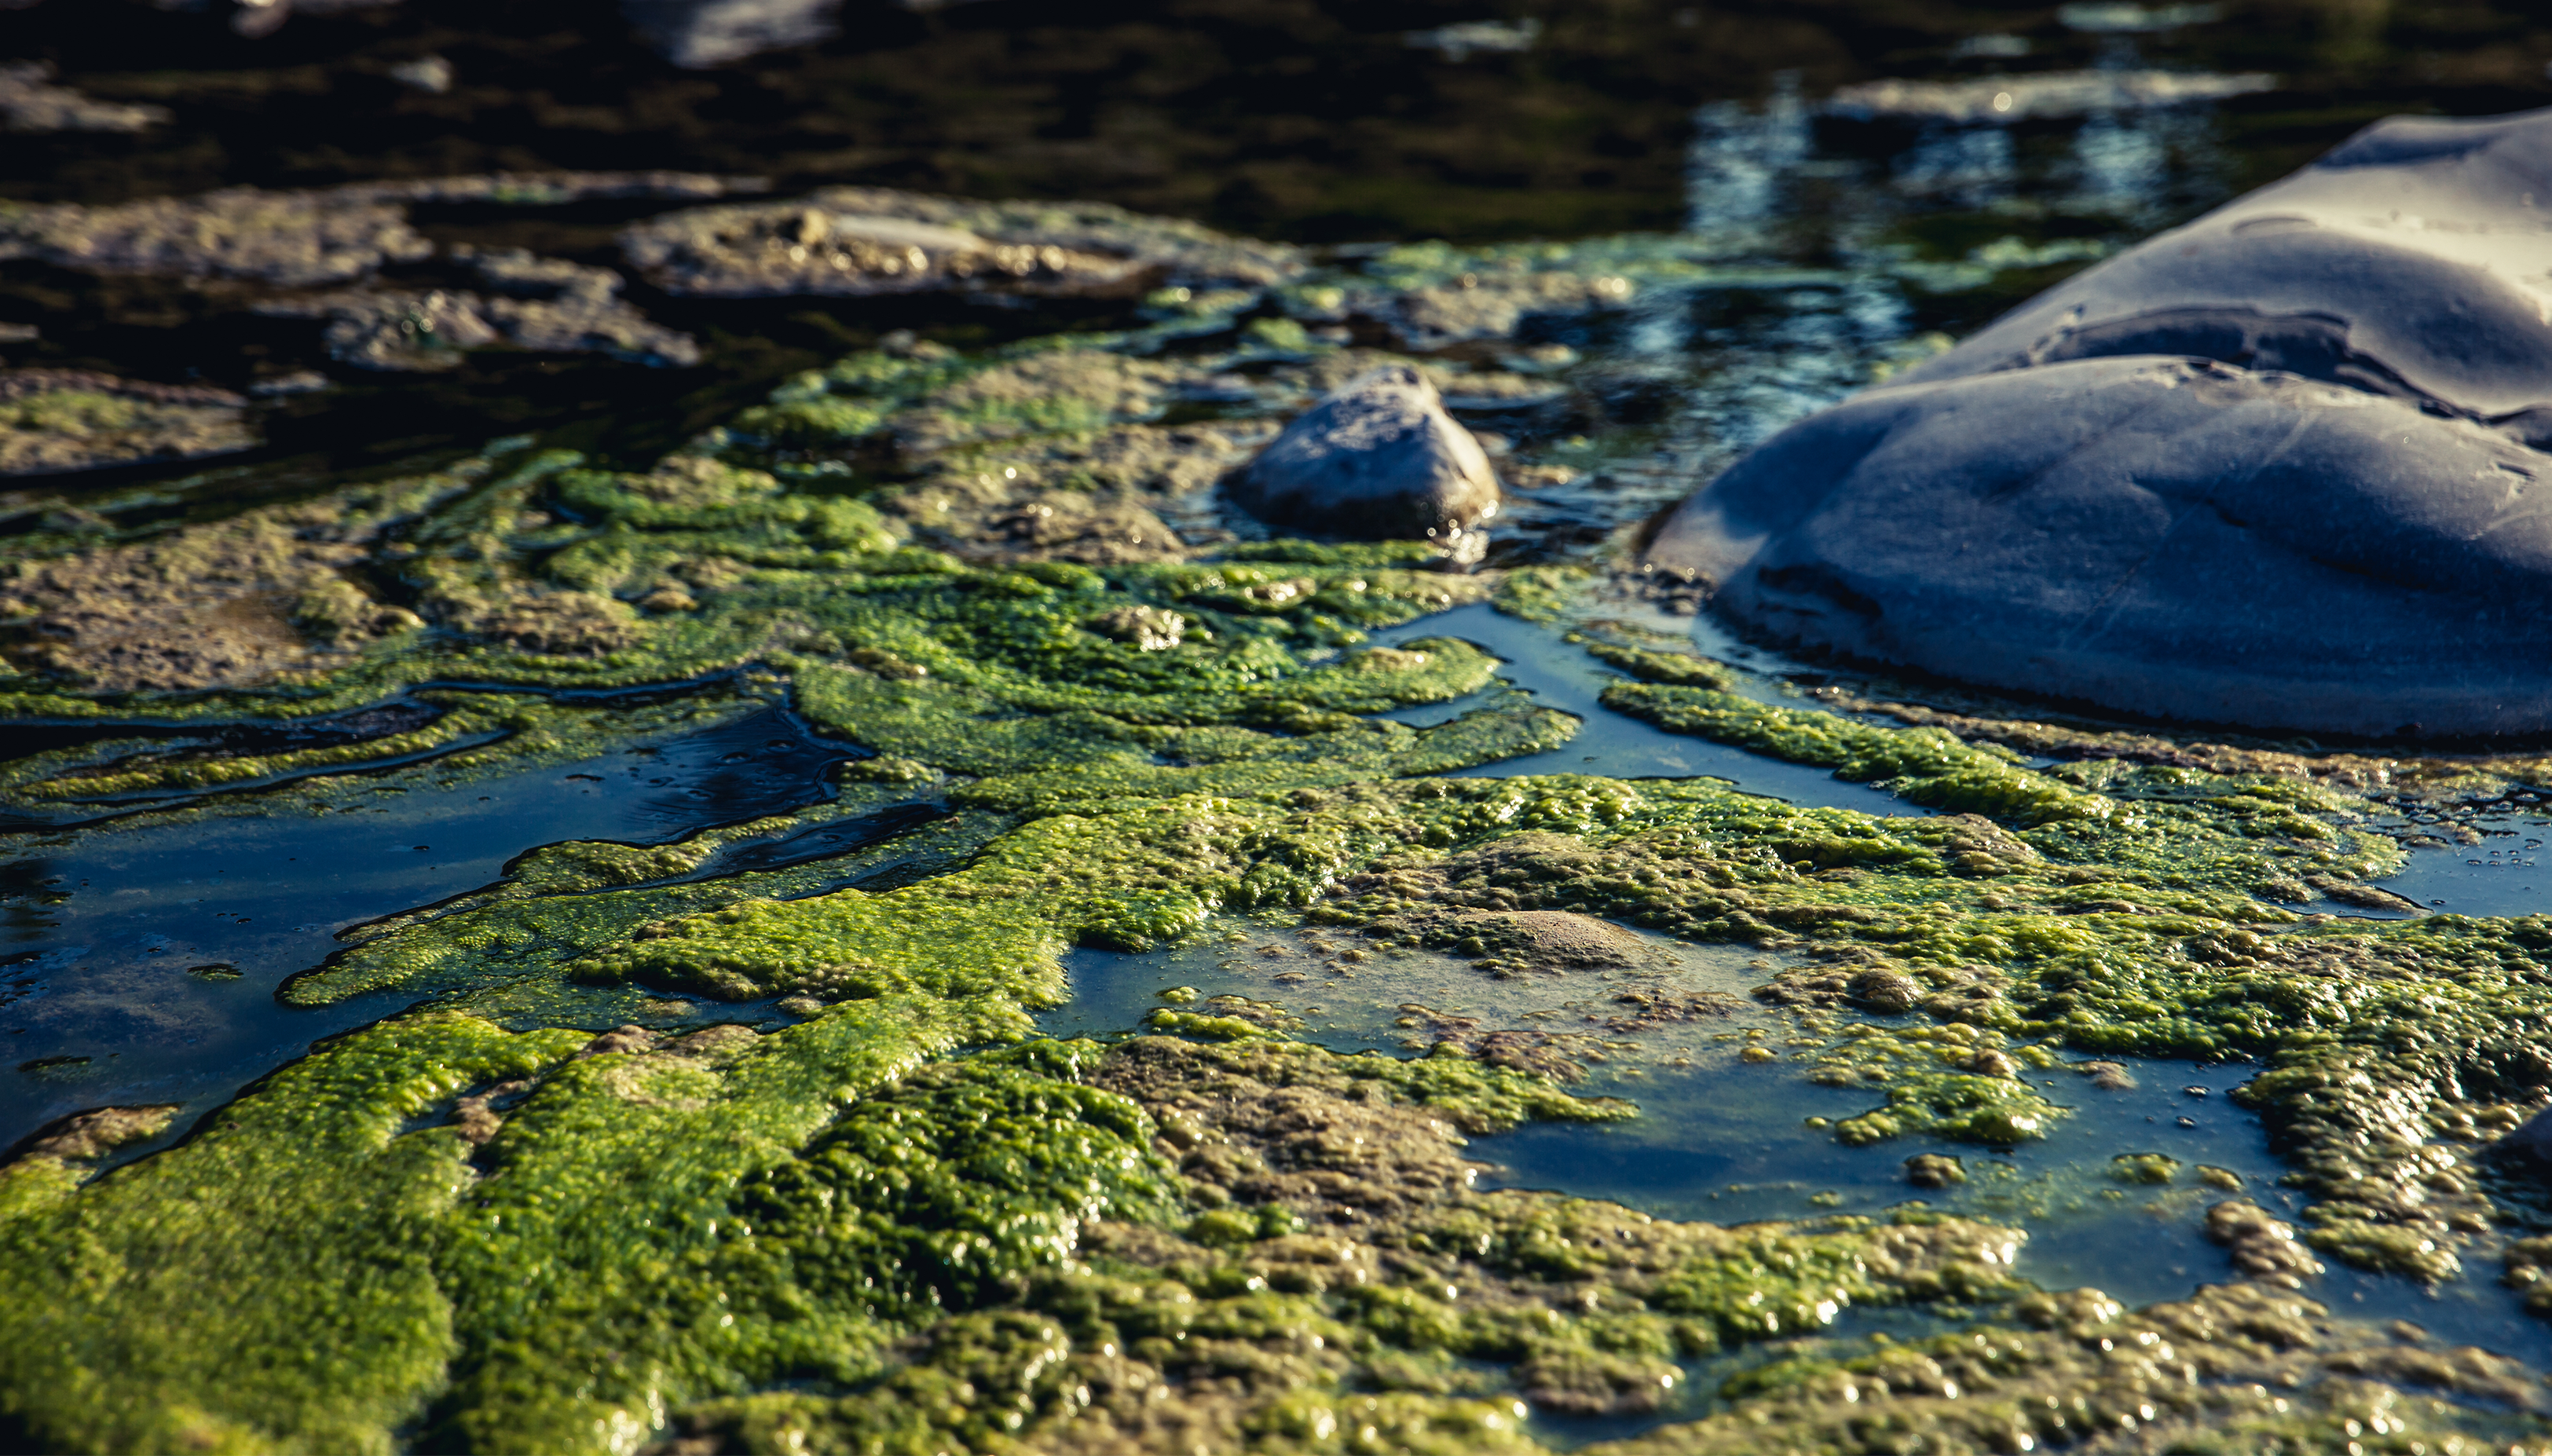 Algae blooms in polluted water